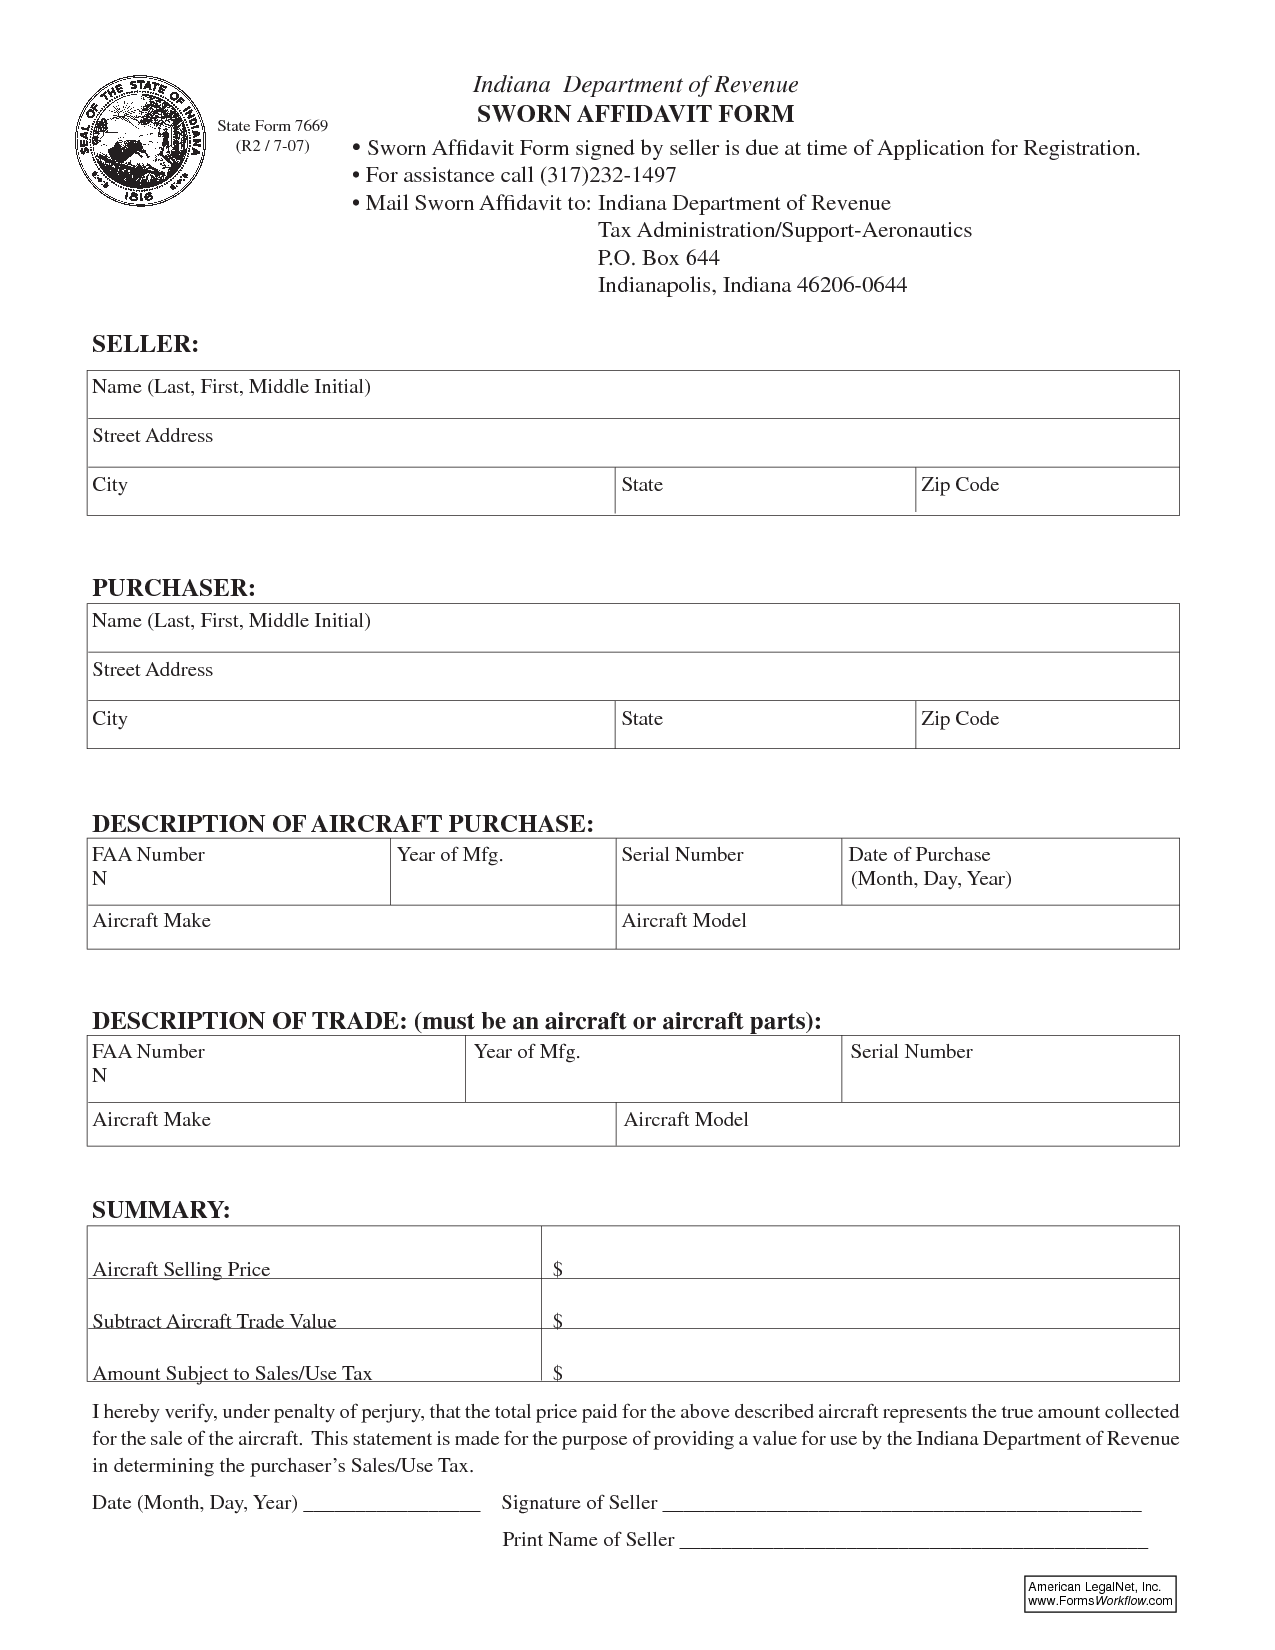 Affidavits Sworn Sample Free Printable Documents Hot Sex Picture 0118